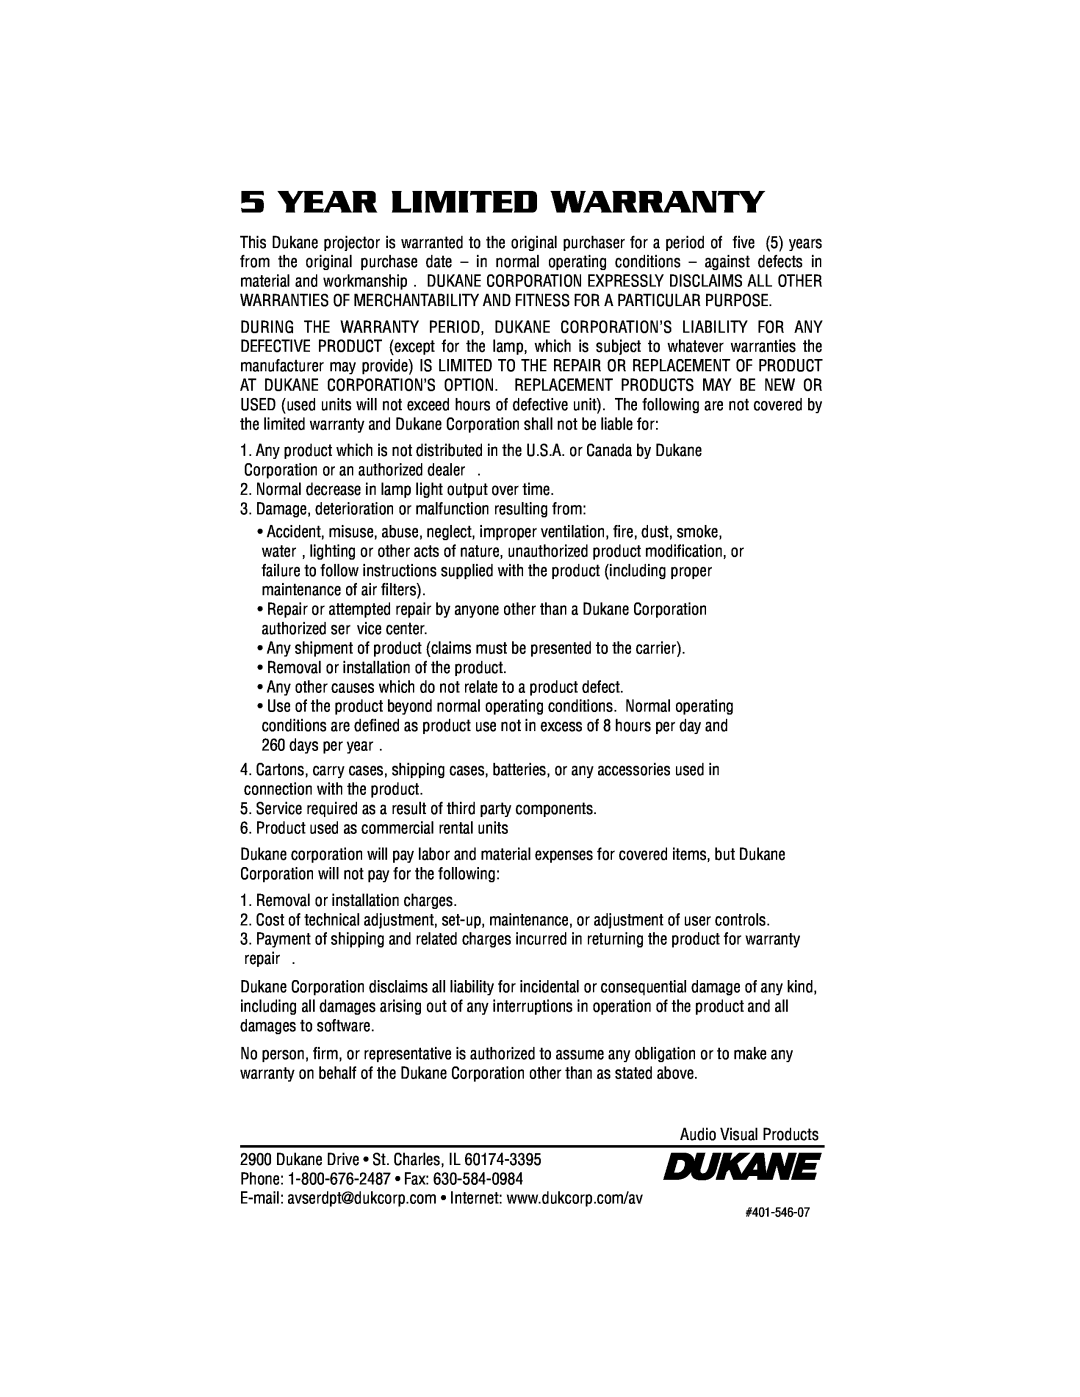 Dukane Projectors manual Year Limited Warranty 